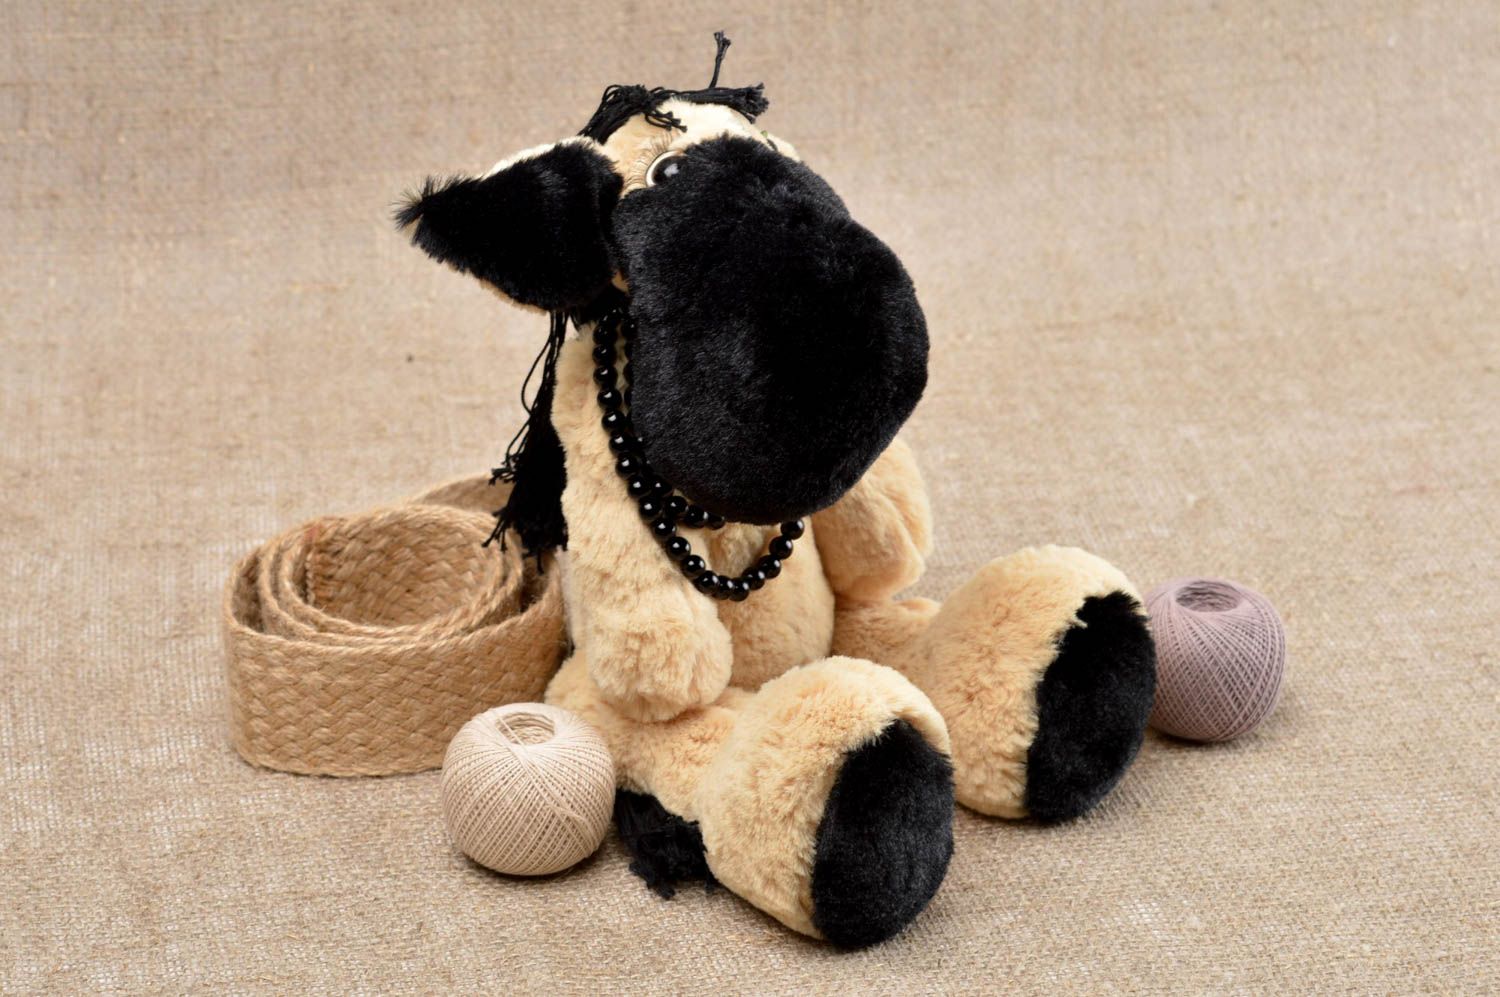 Handmade toy unusual soft toy for kids nursery decor gift ideas animal toy photo 1